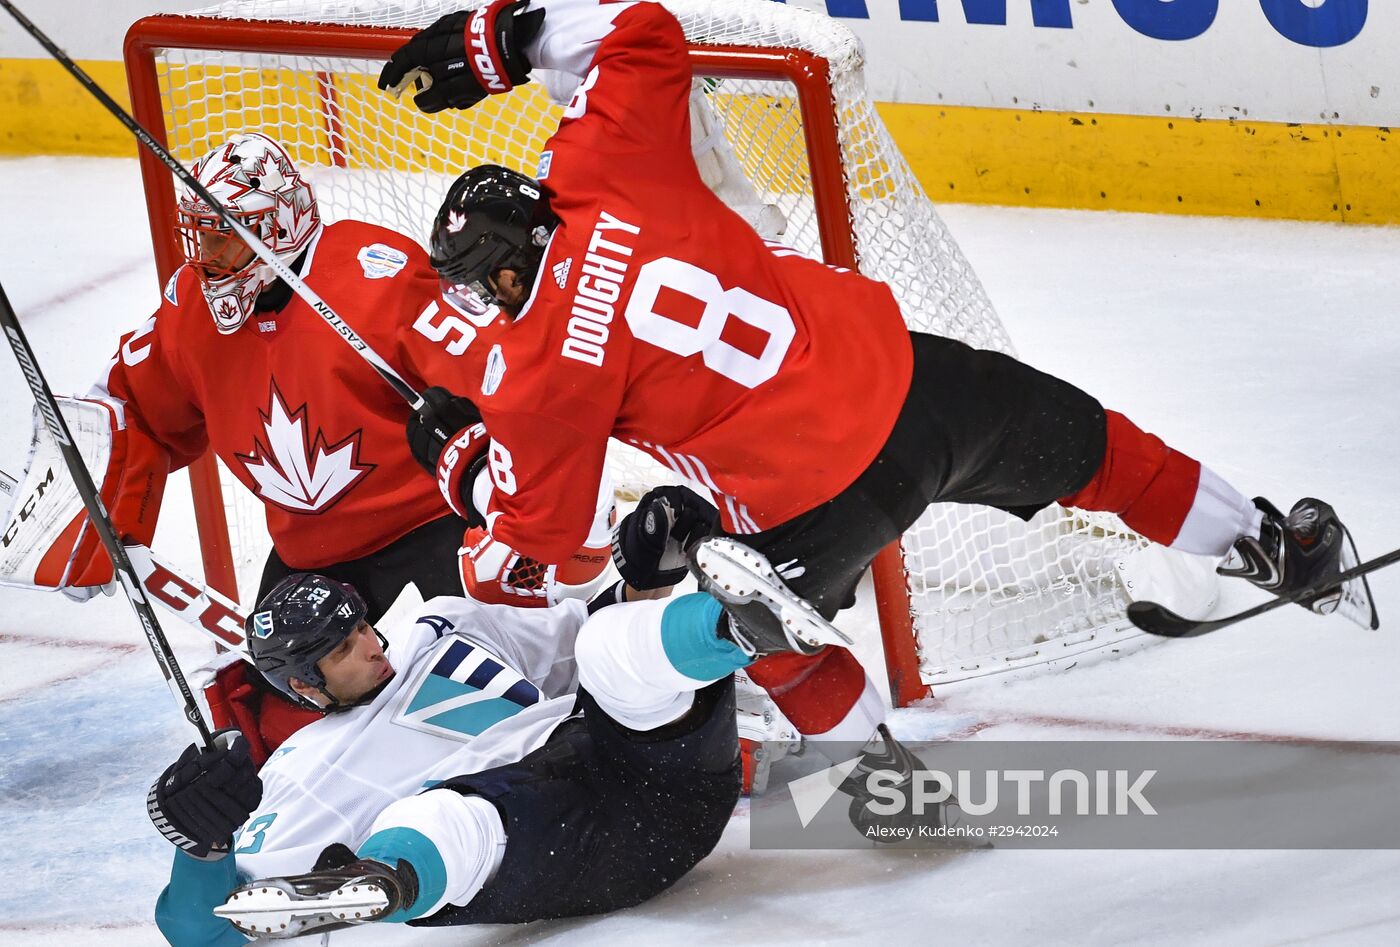 2016 World Cup of Hockey. Canada vs. Europe